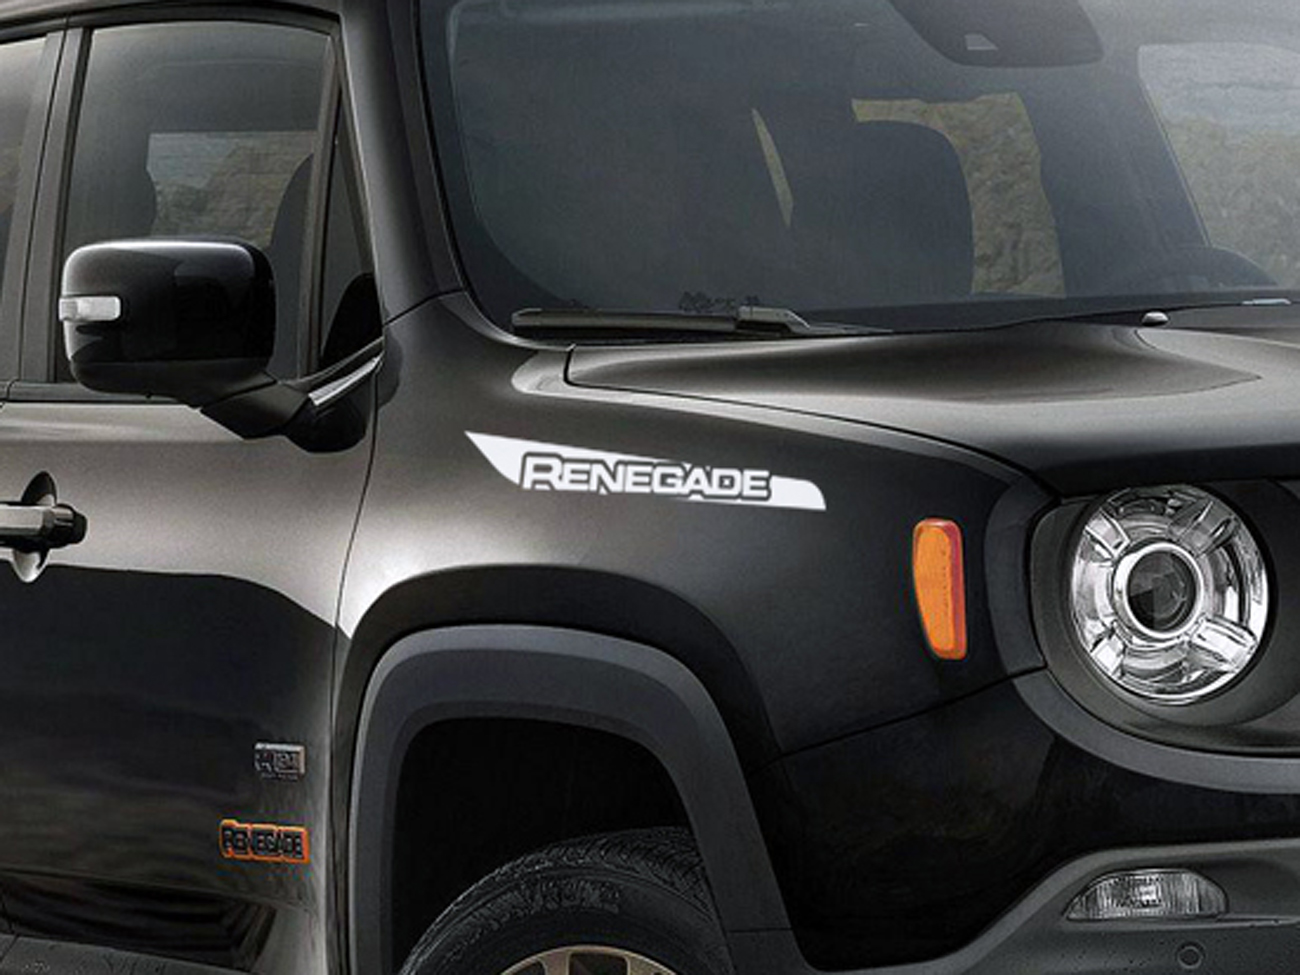 Acquista Kit adesivi Renegade per fianchi Jeep Renegade